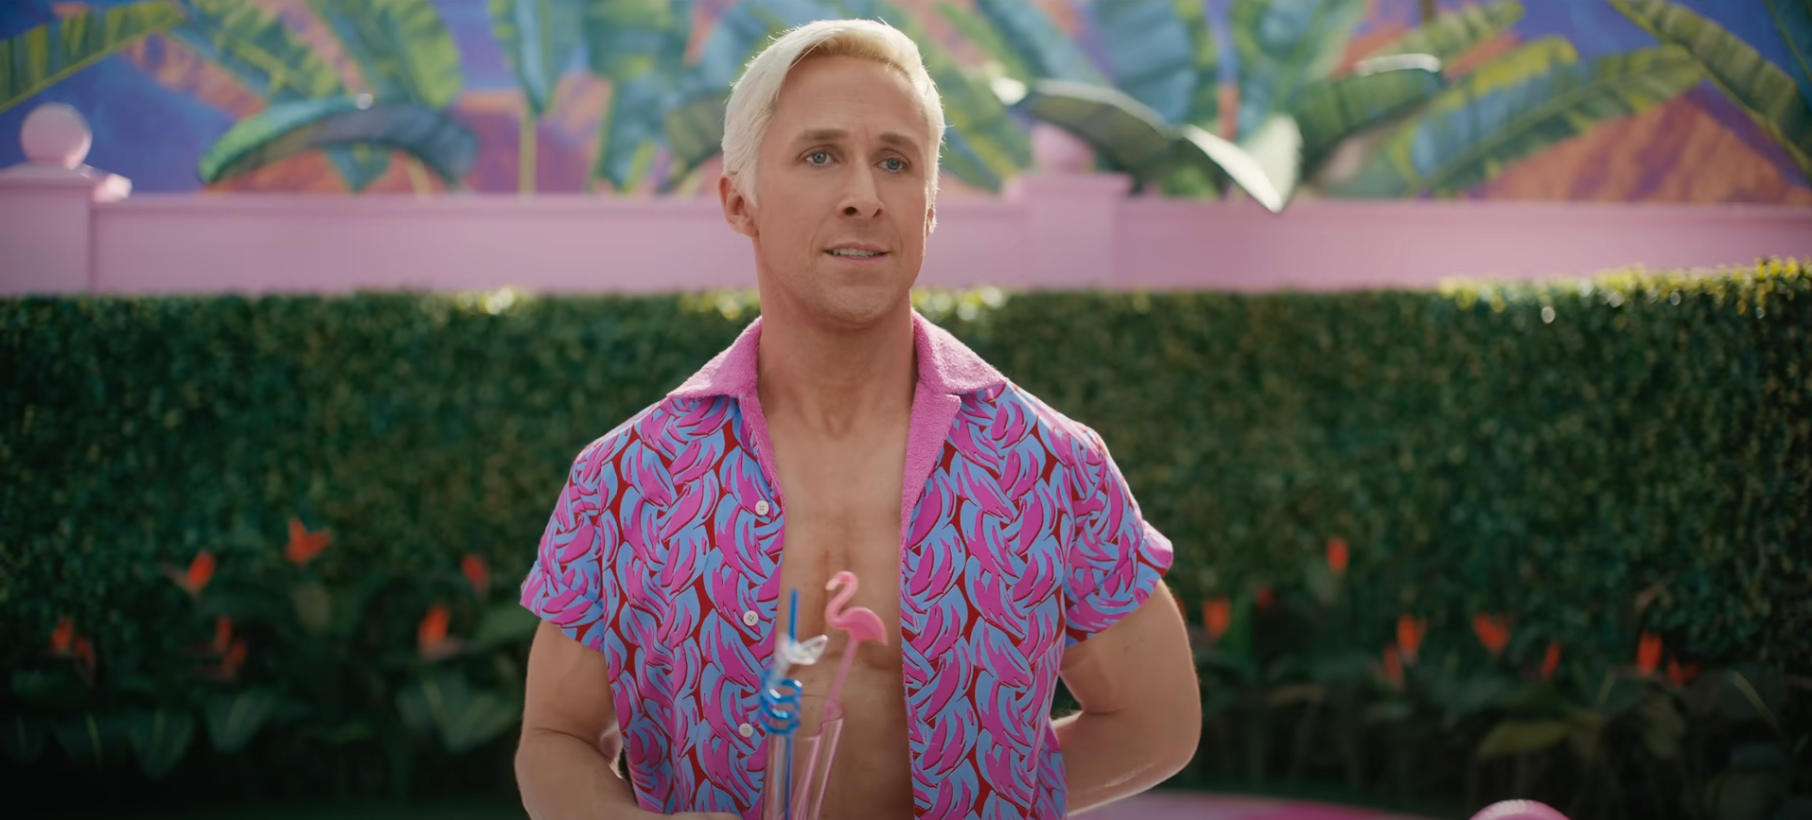 Barbie Movie Music Video Features Ryan Gosling Singing